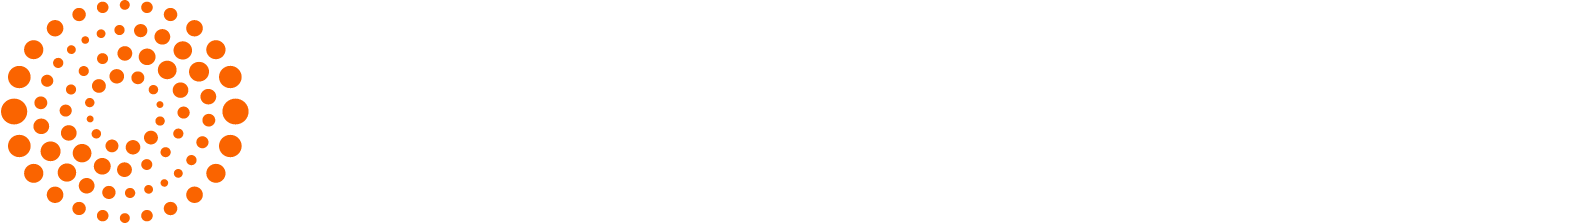 Thomson Reuters
 logo large for dark backgrounds (transparent PNG)